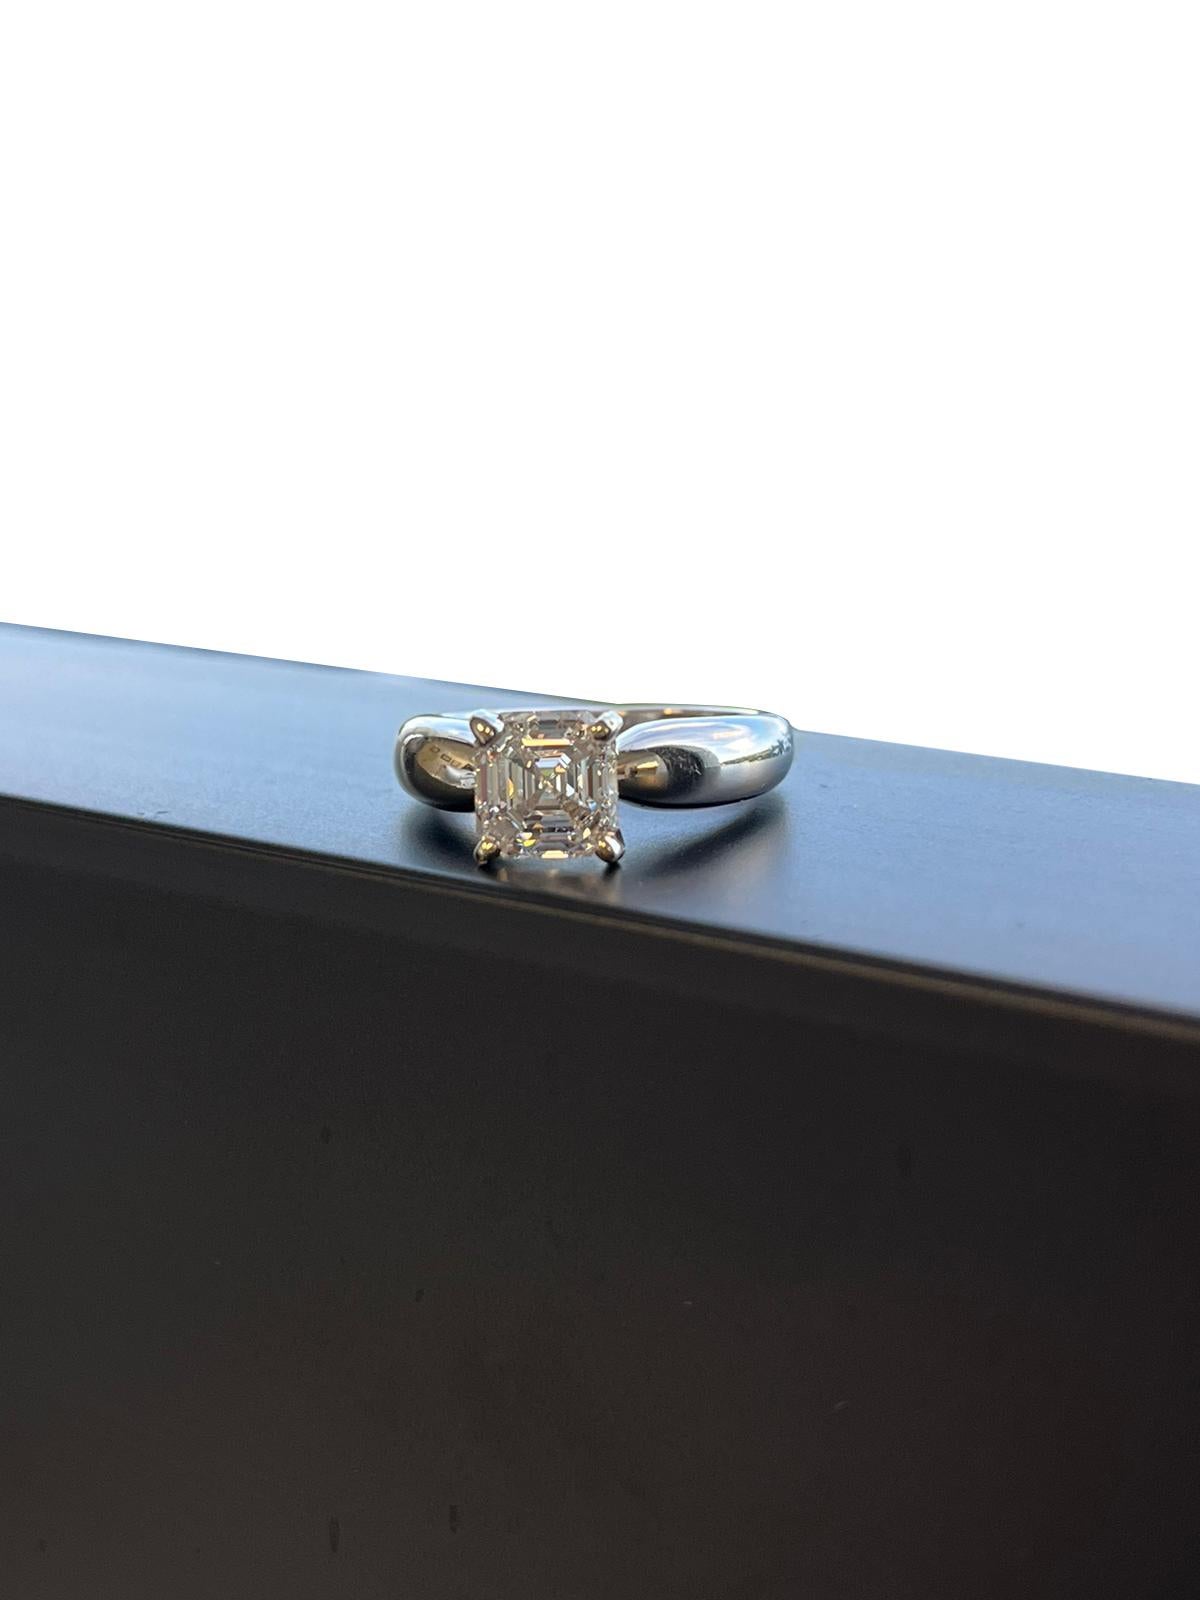 Flawless GIA Certified 2.01 Carat Asscher Cut Diamond Ring 18 Karat White Gold For Sale 6